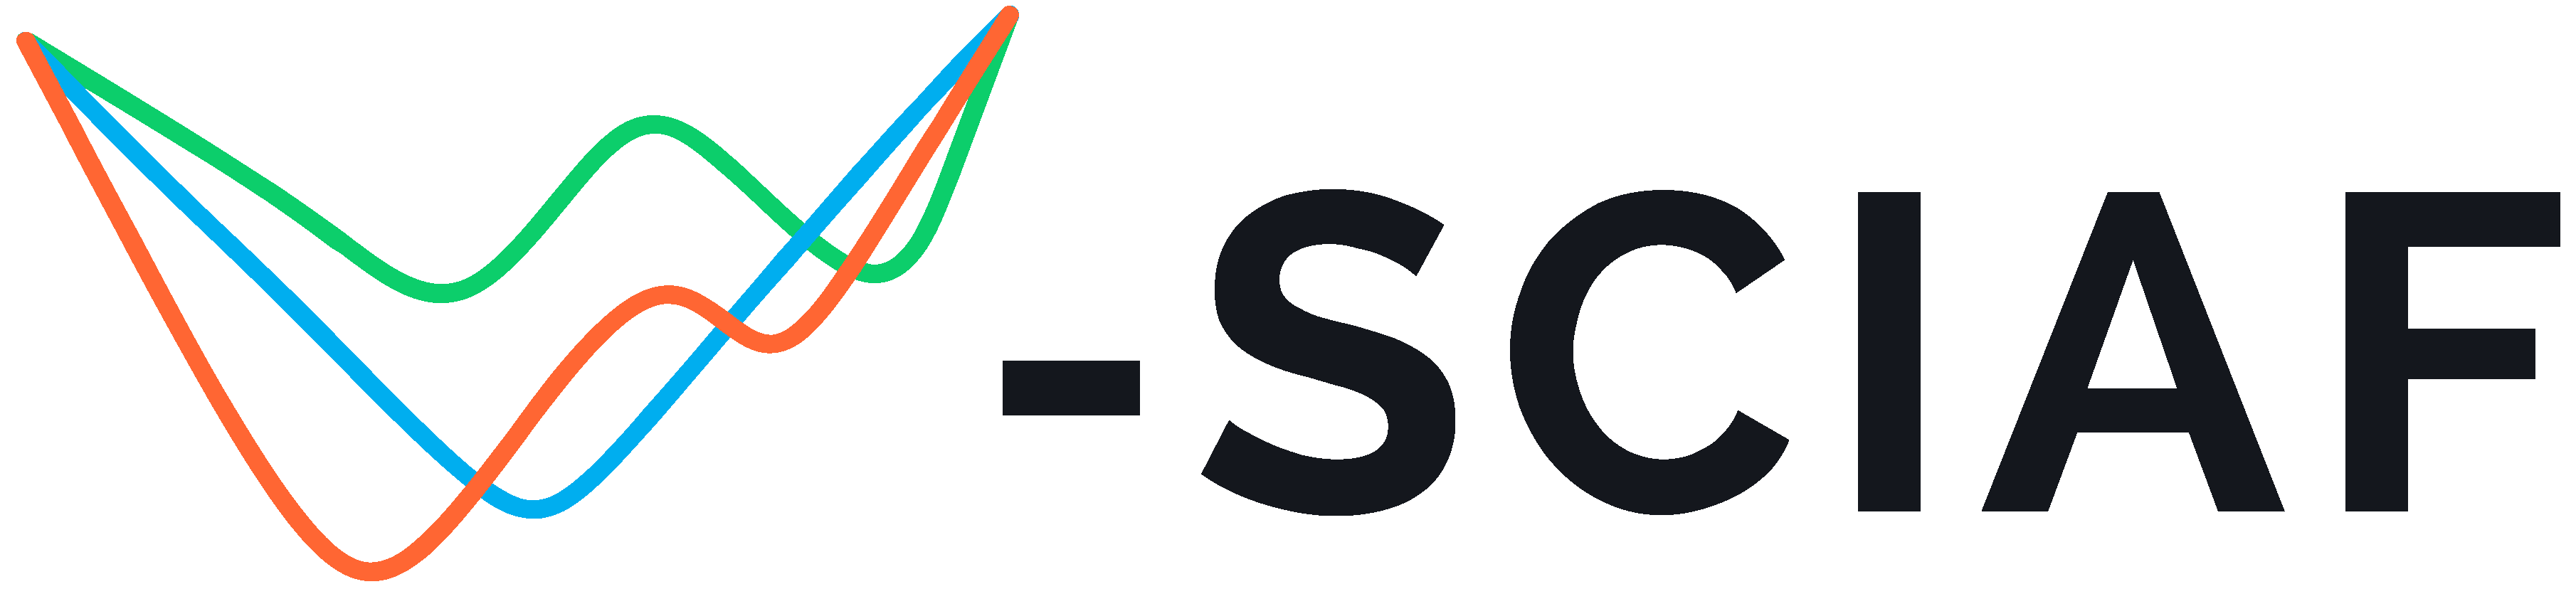 logo 1-2